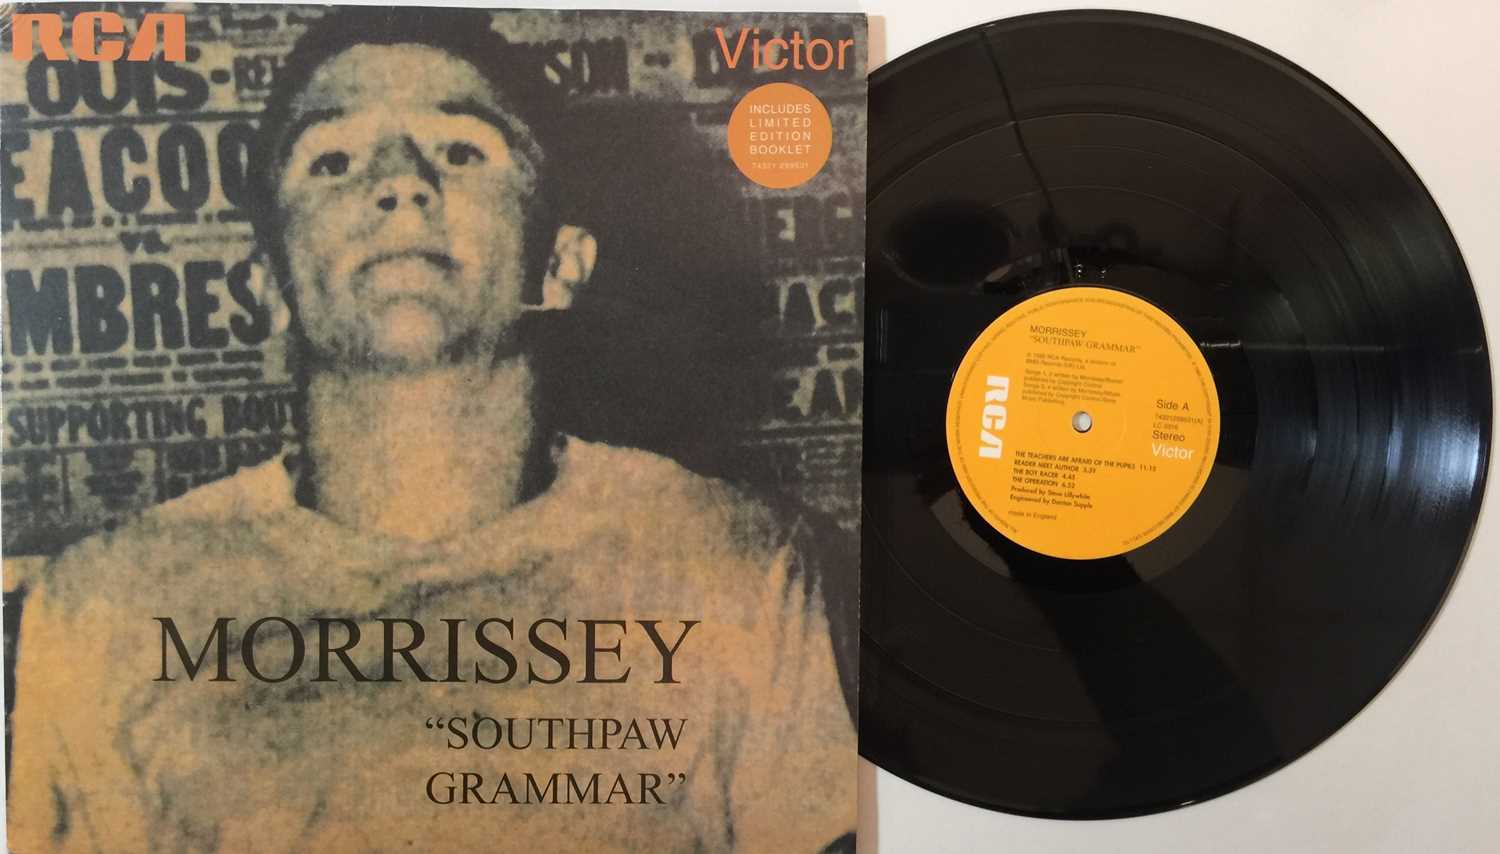 Lot 681 - MORRISSEY - SOUTHPAW GRAMMAR LP (ORIGINAL UK 1995 COPY - 74321299531)